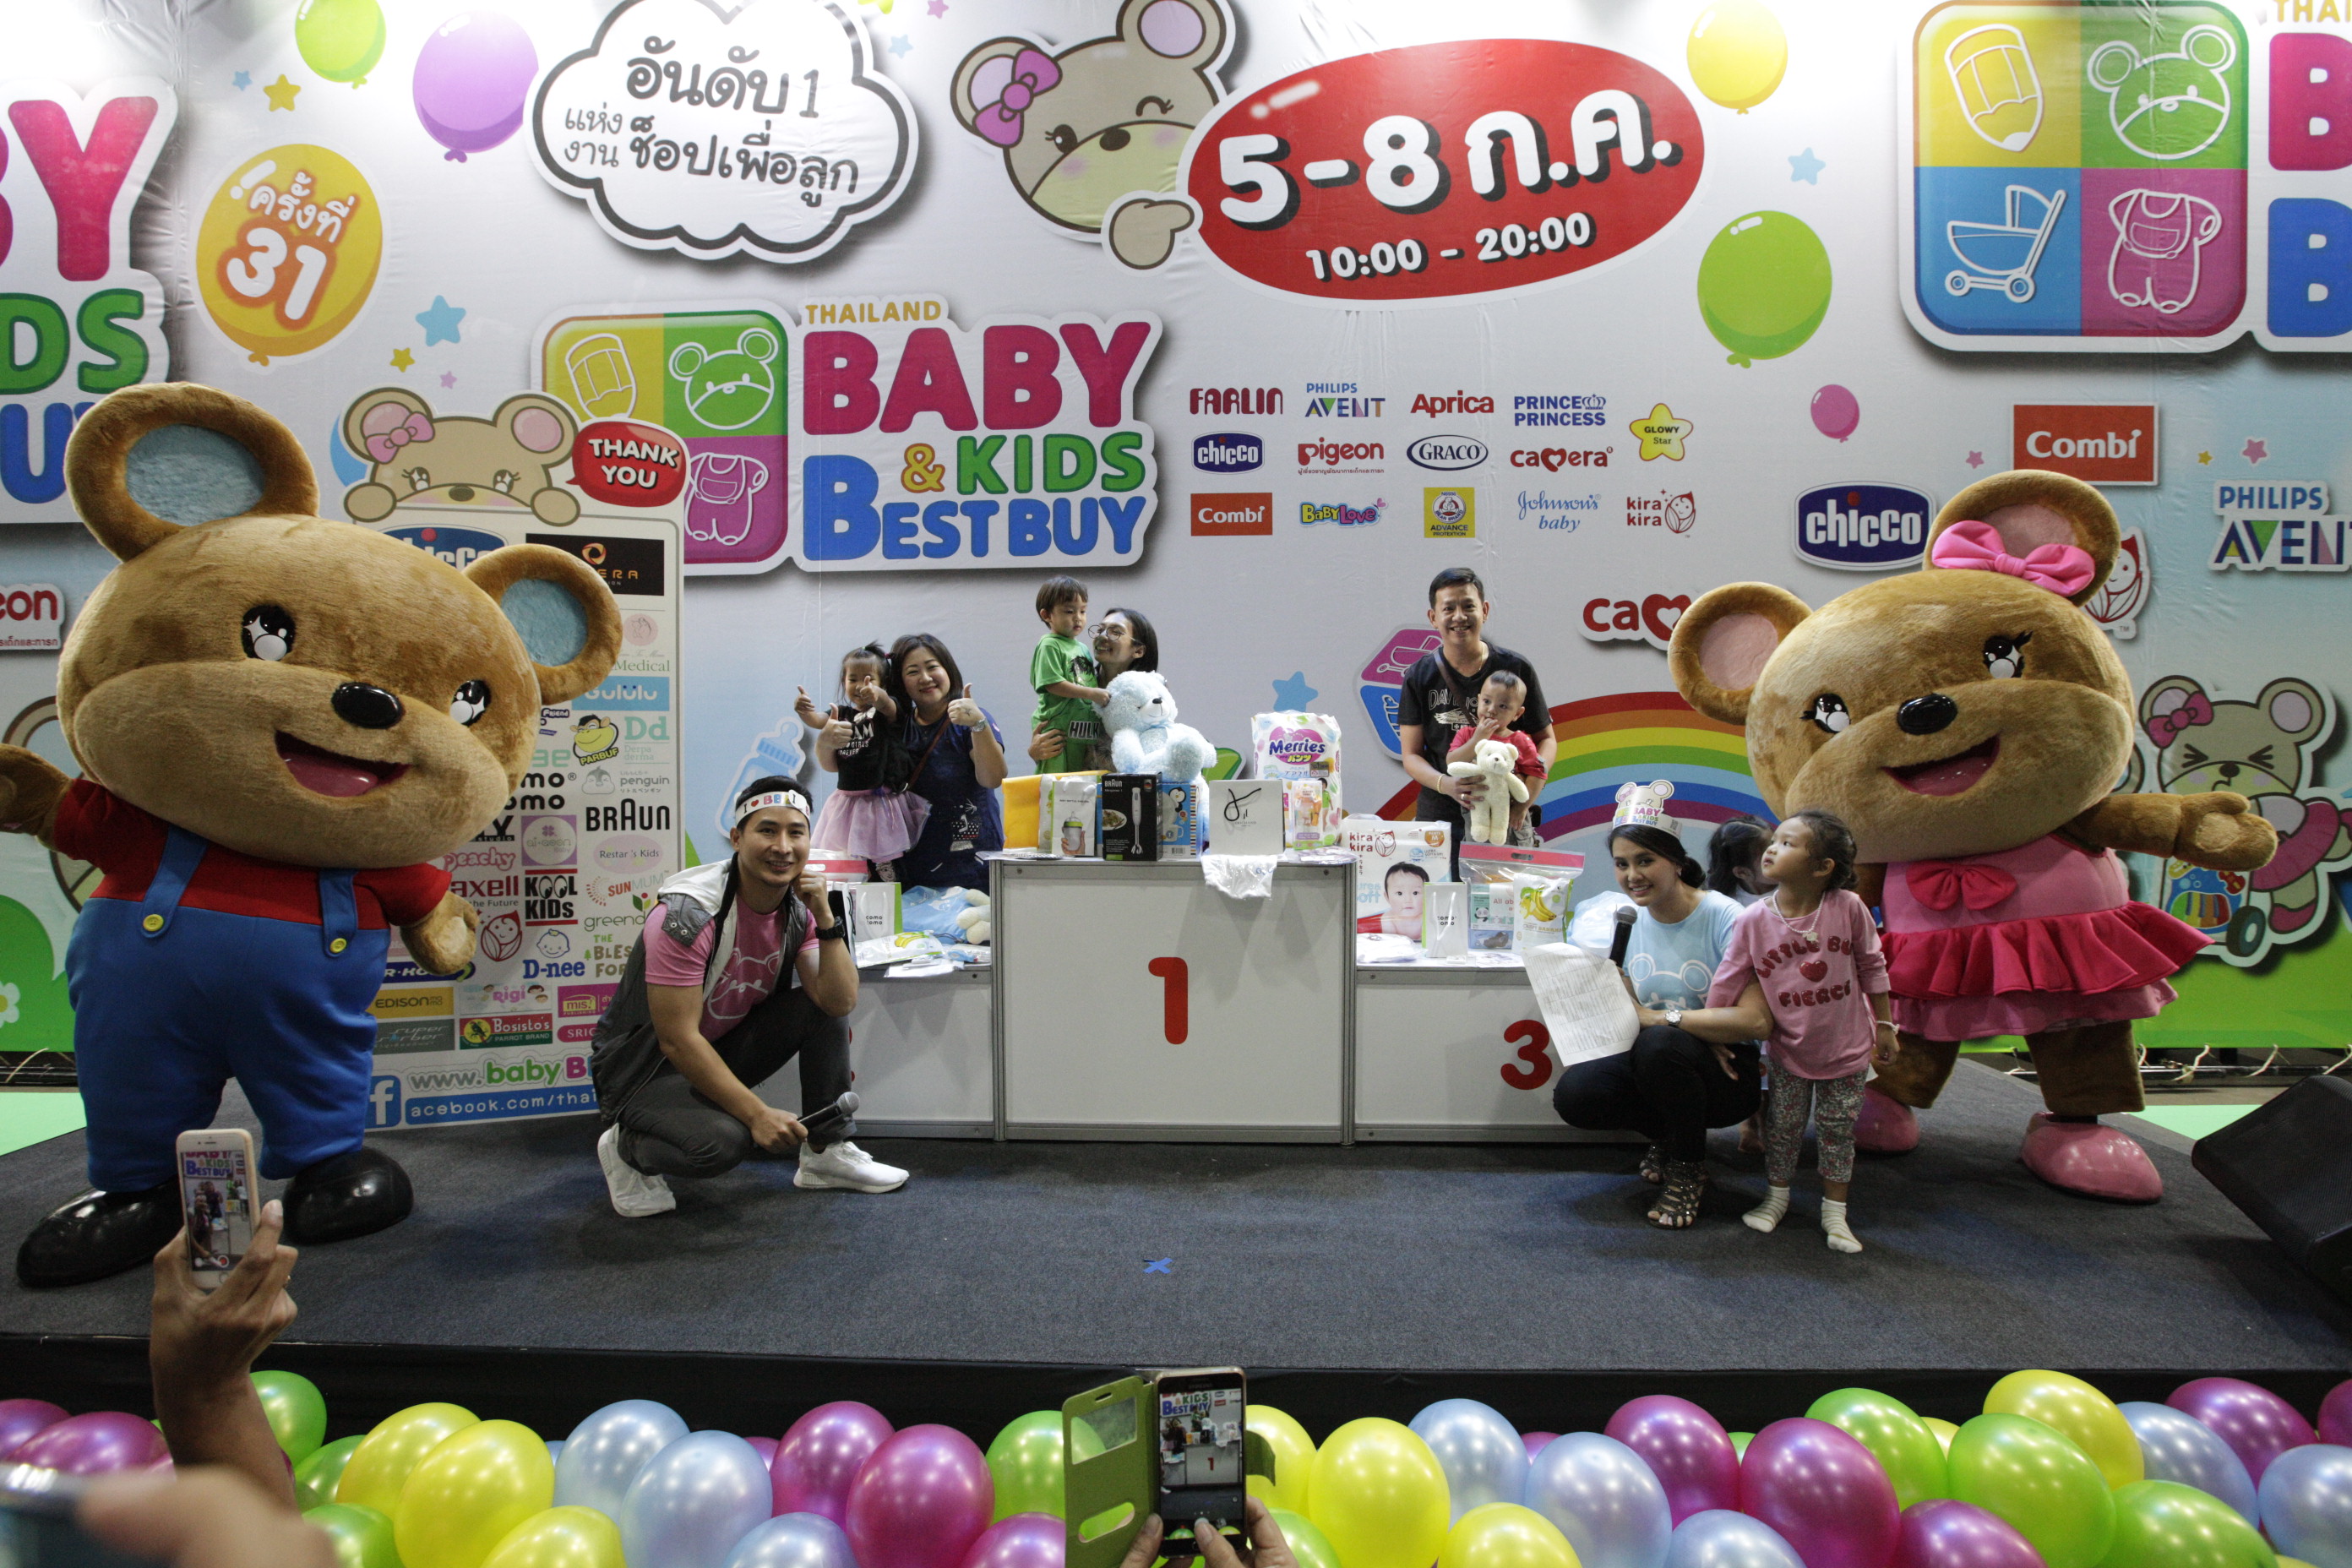 Thailand Baby & Kids Best Buy ครั้งที่ 31